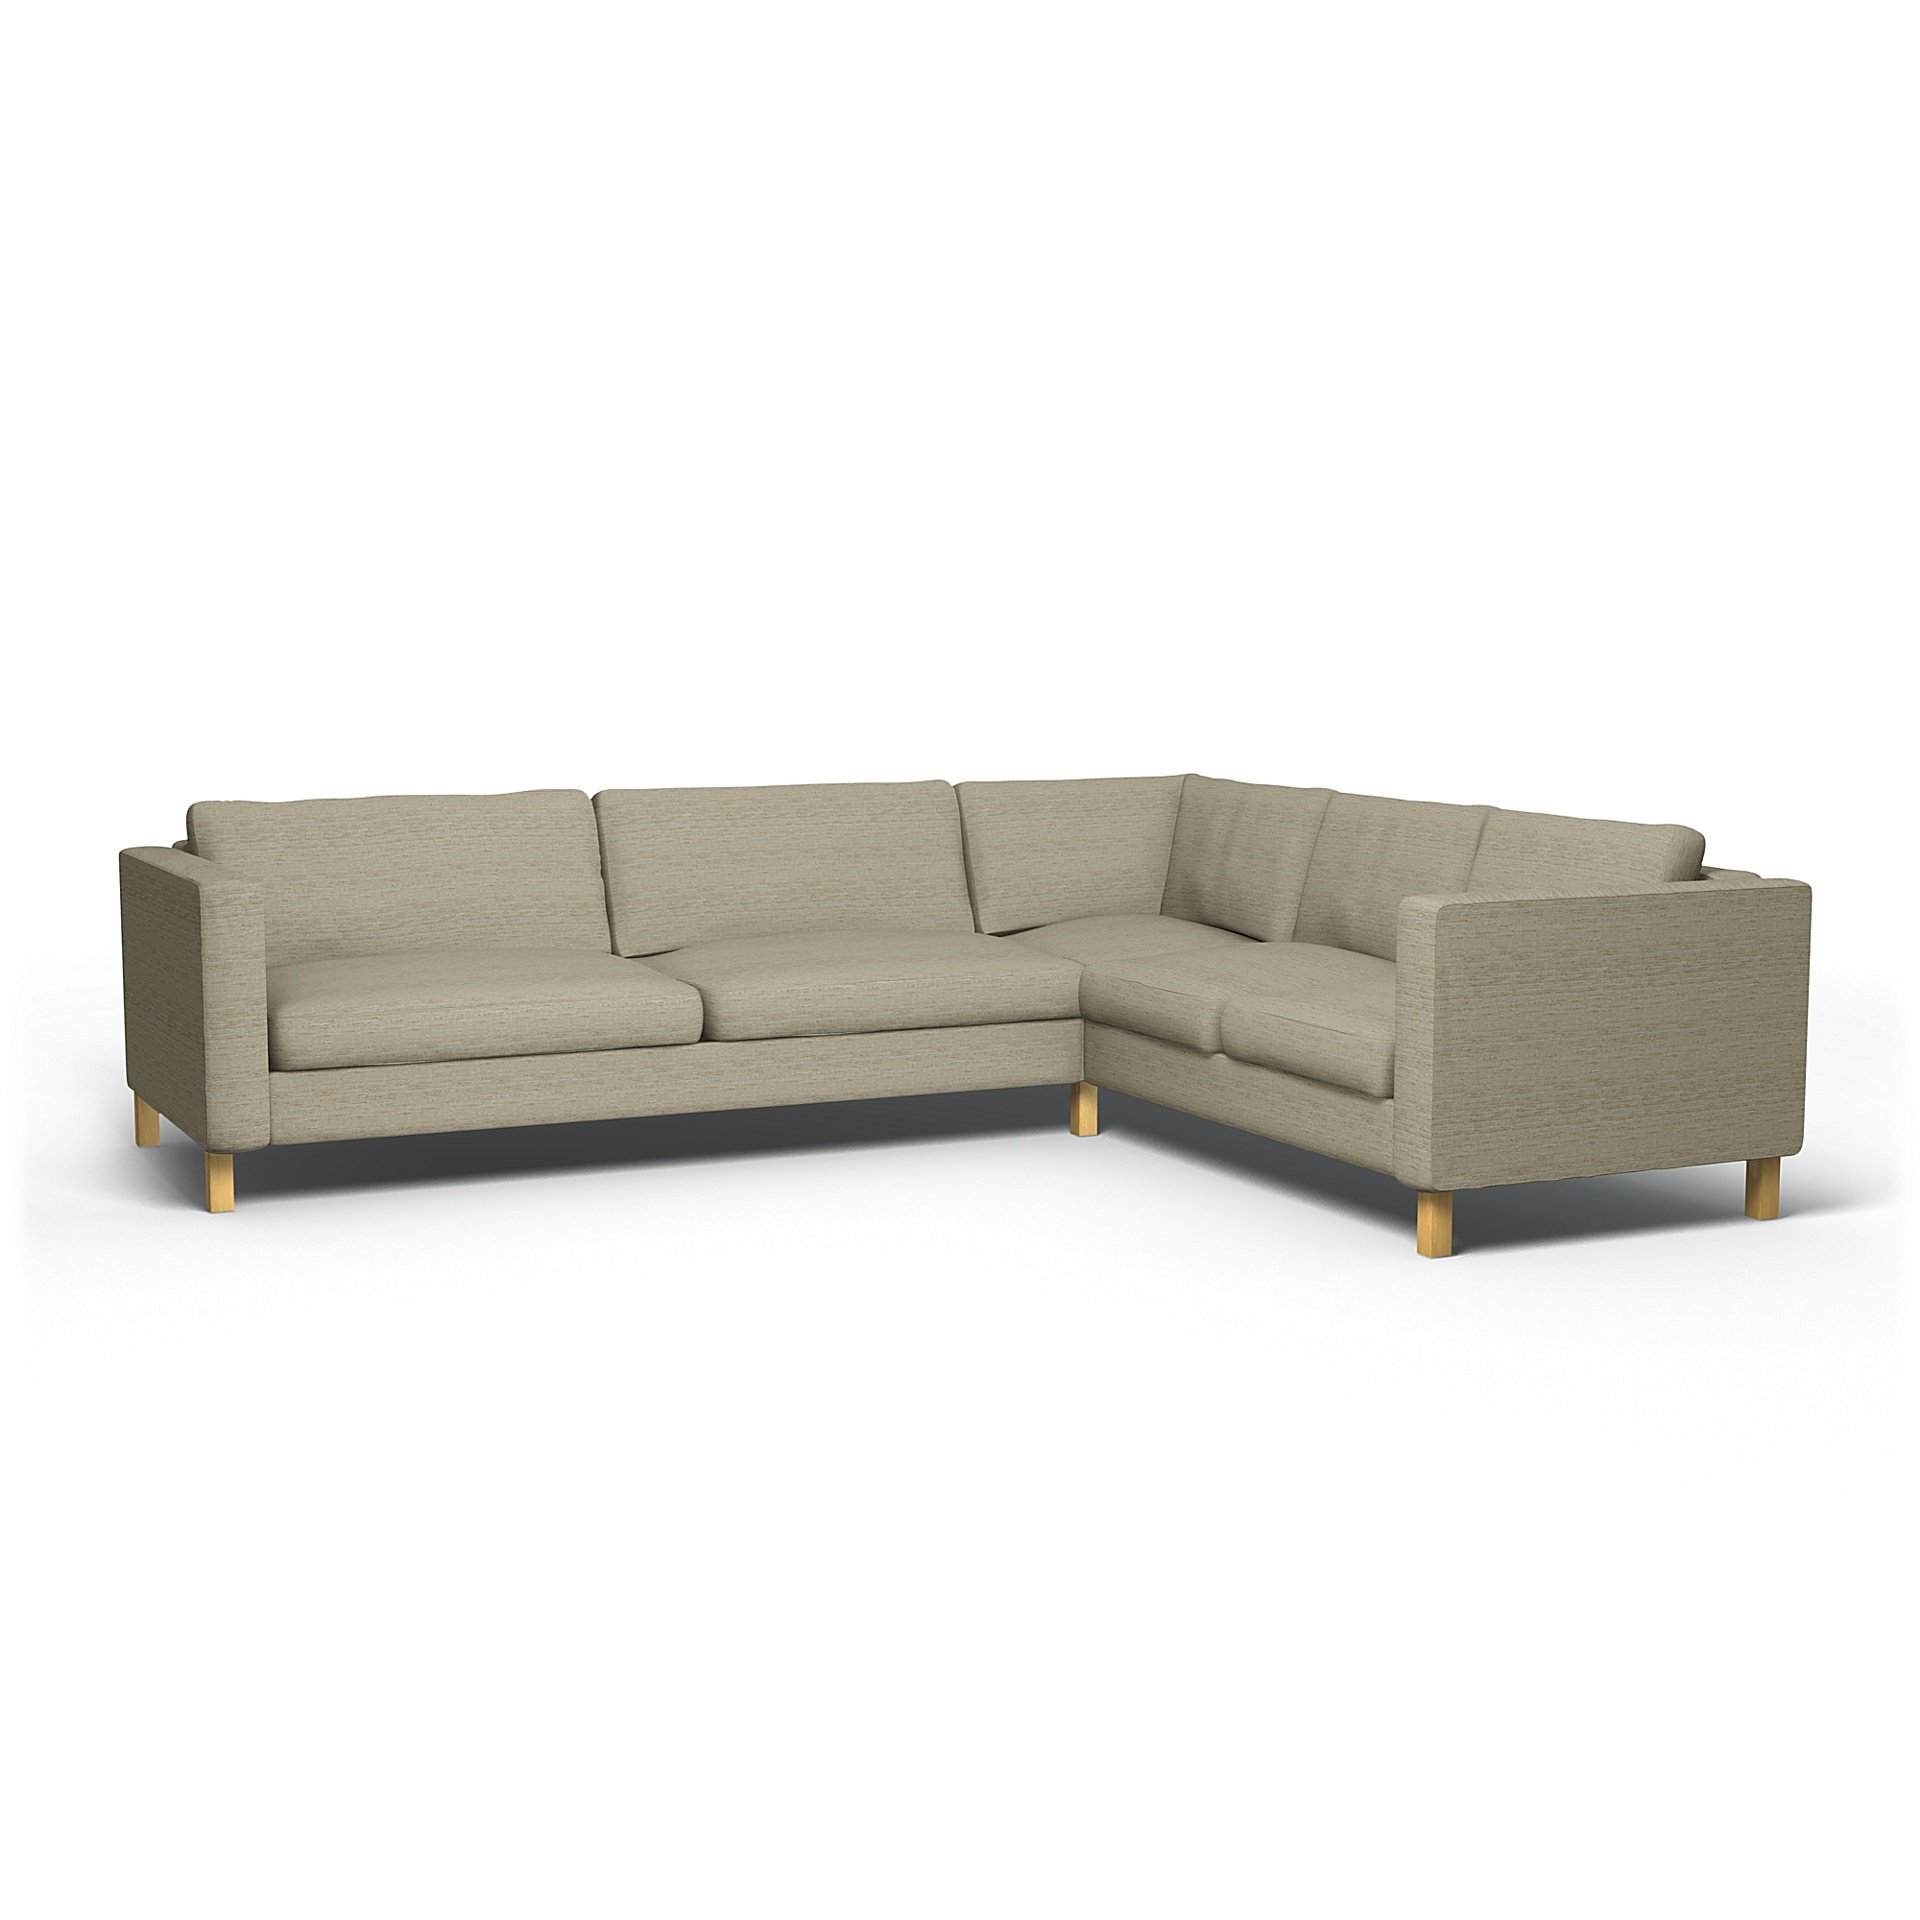 IKEA - Karlstad Corner Sofa Cover (3+2), Light Sand, Boucle & Texture - Bemz